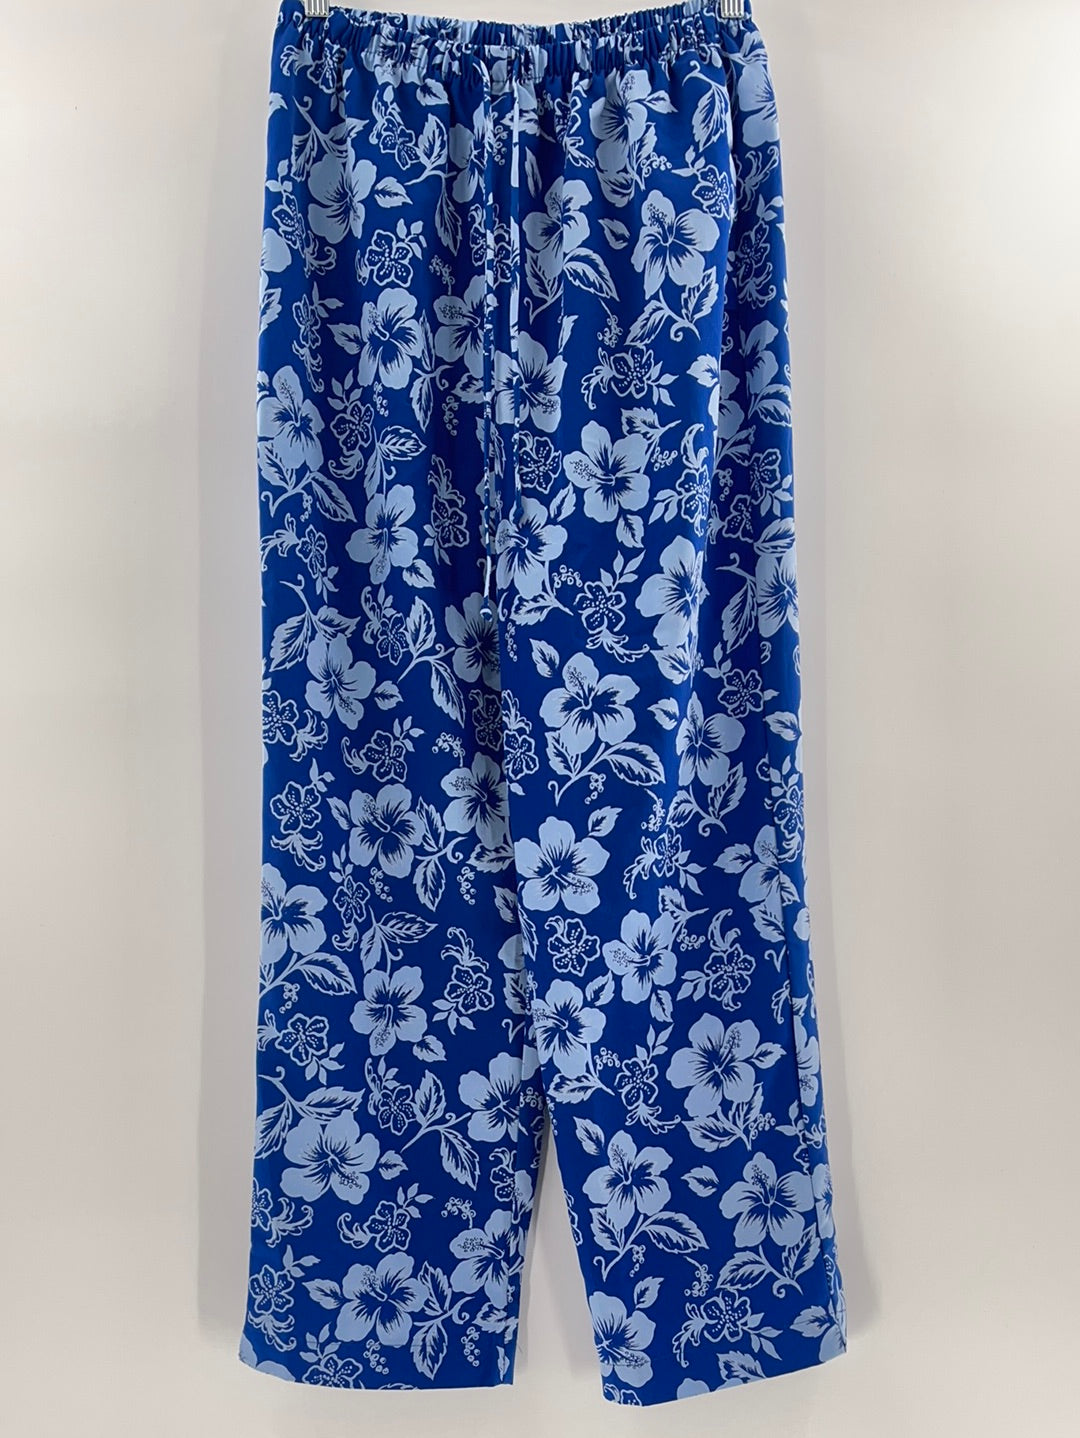 Blue Hawaiian Elastic Pants (Size Medium)